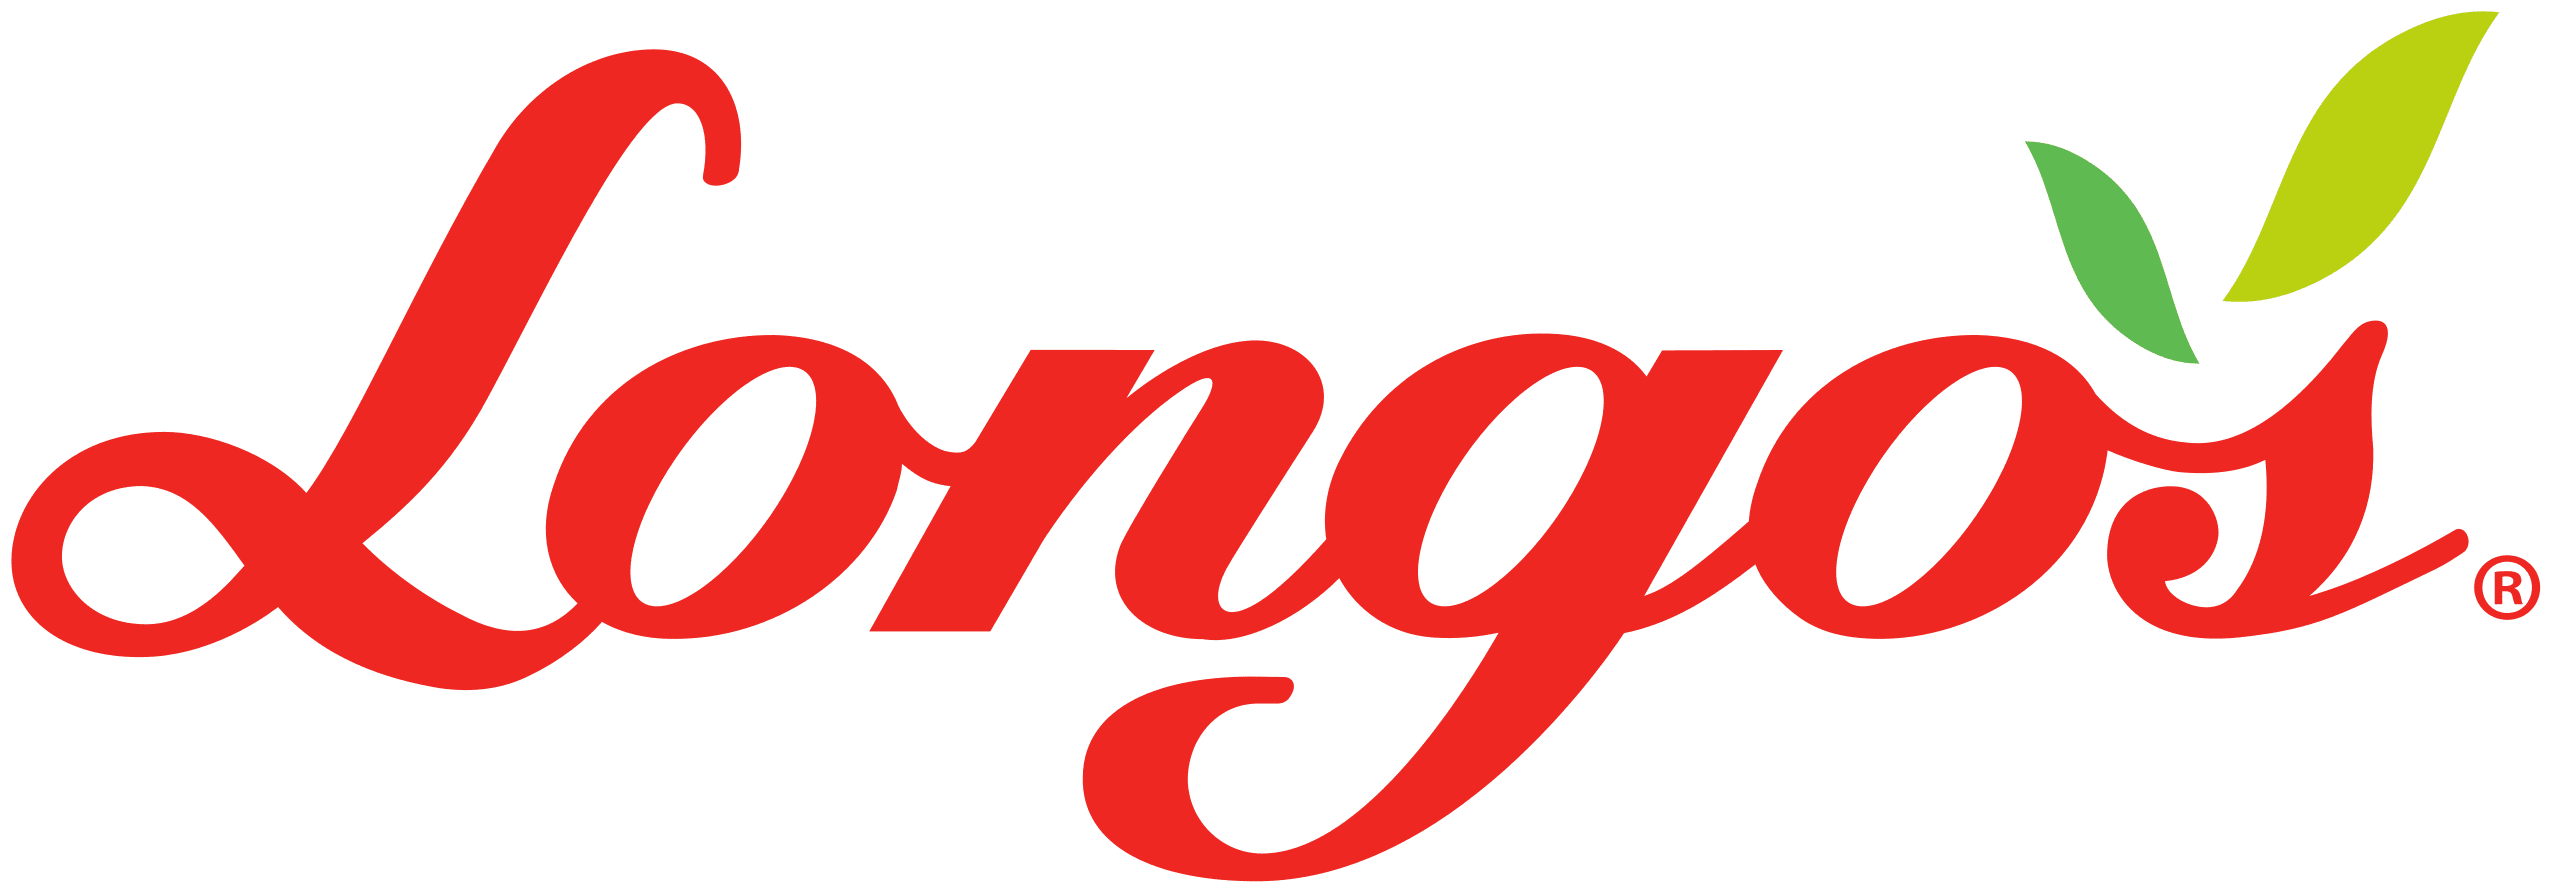 Longo's logo